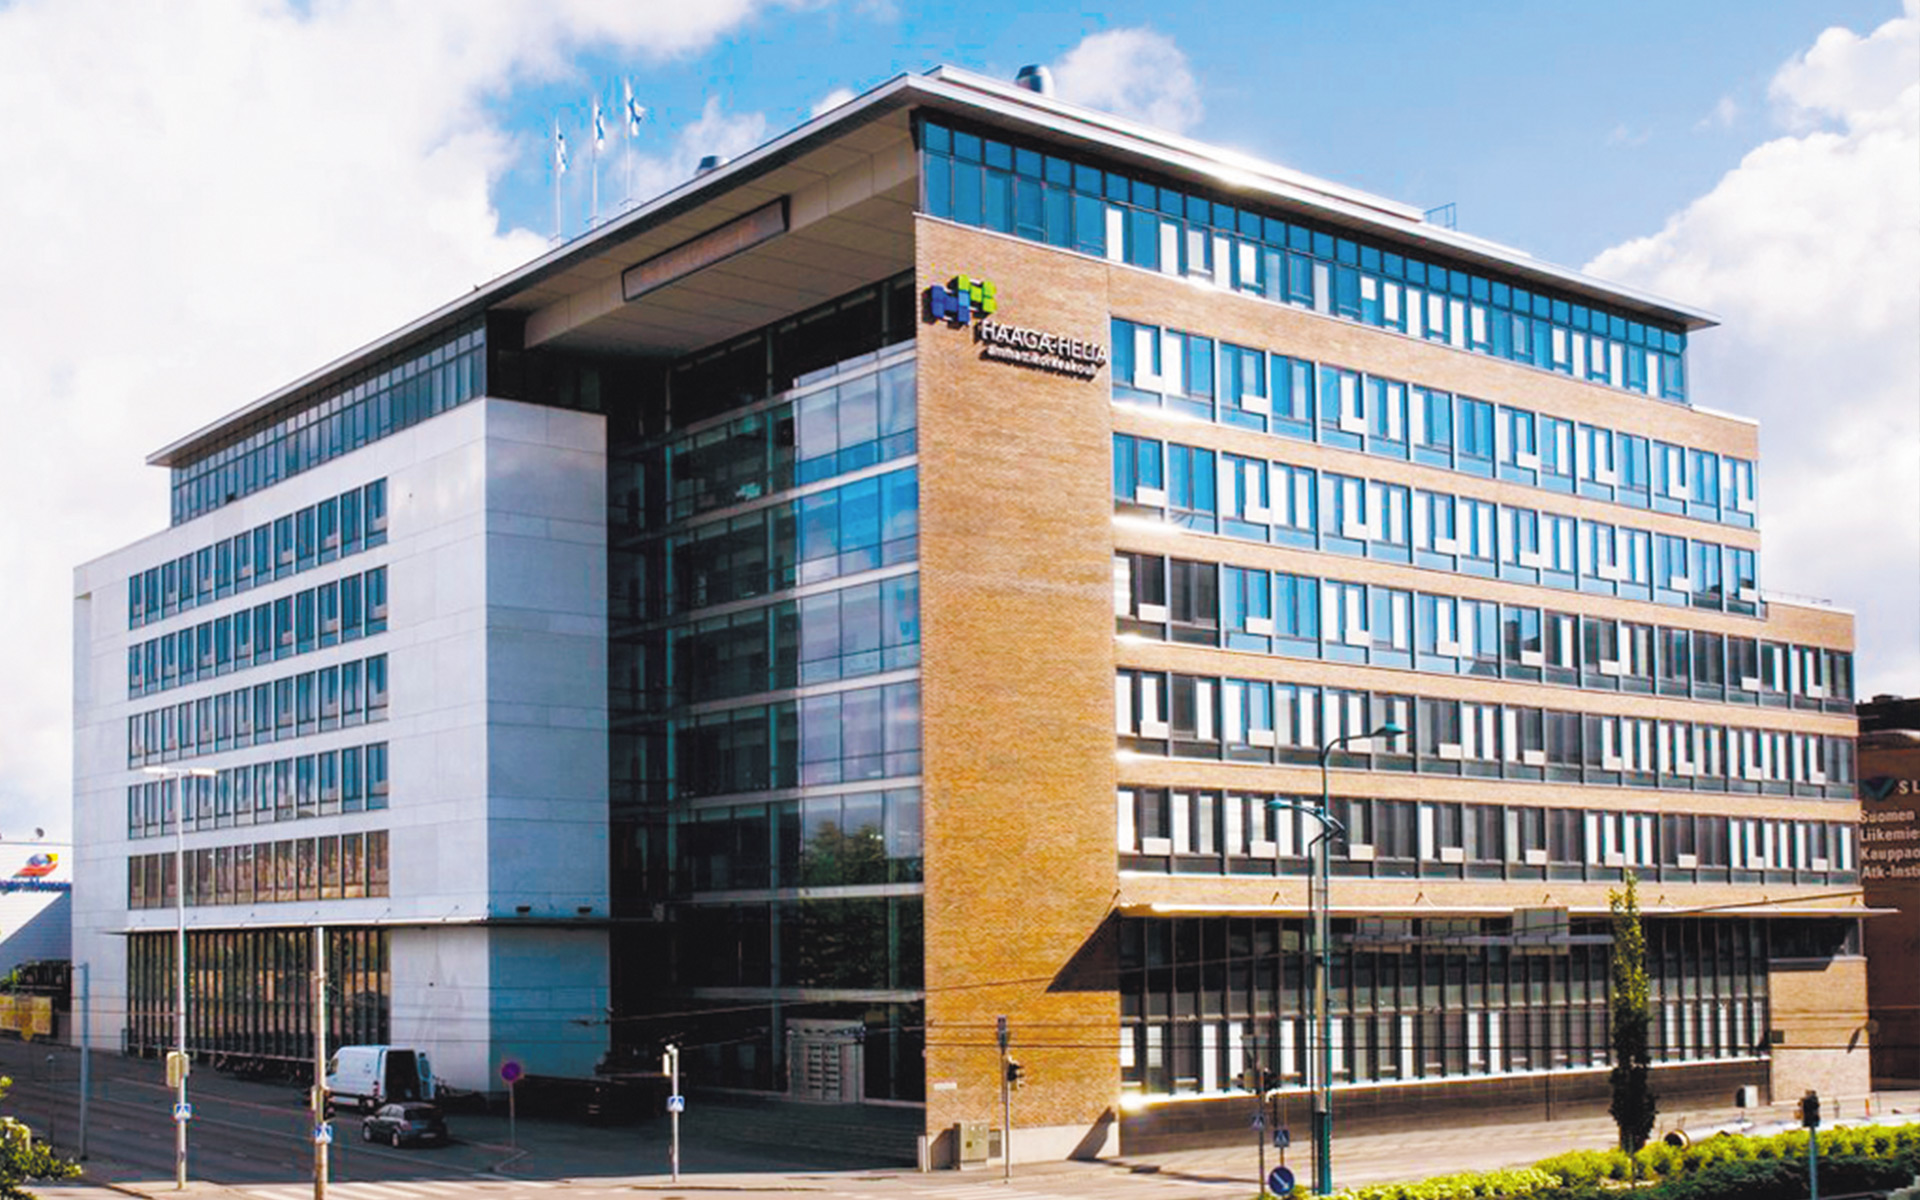 Haaga – Helia University of Applied Sciences